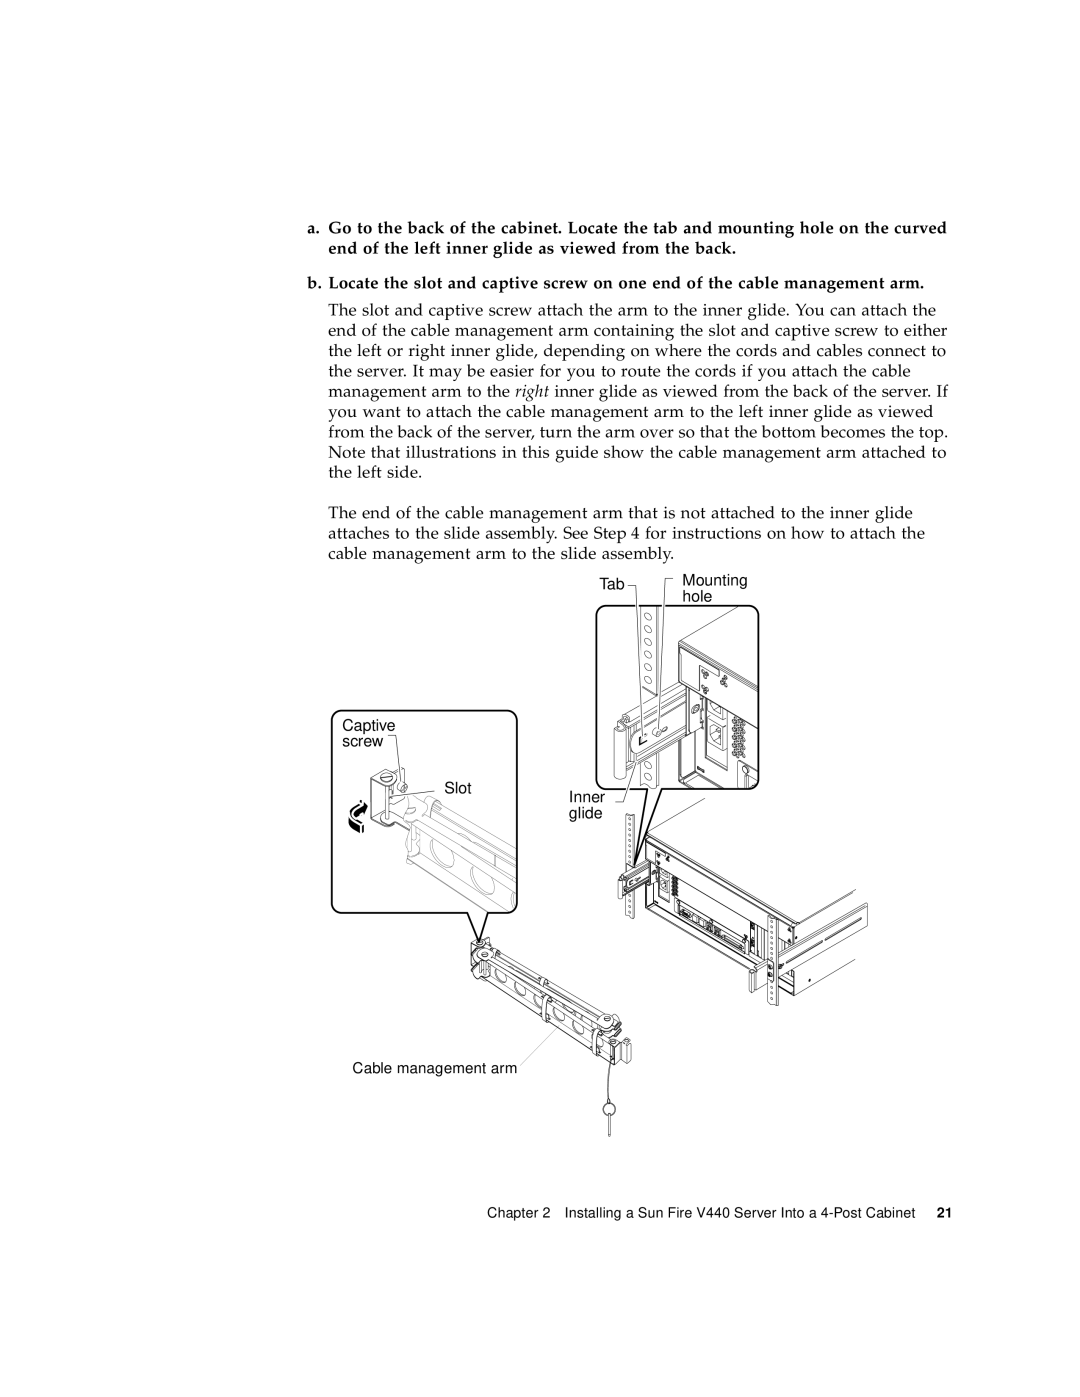 Sun Microsystems 816-7727-10 manual Captive screw Slot, Tab Mounting hole Inner glide 